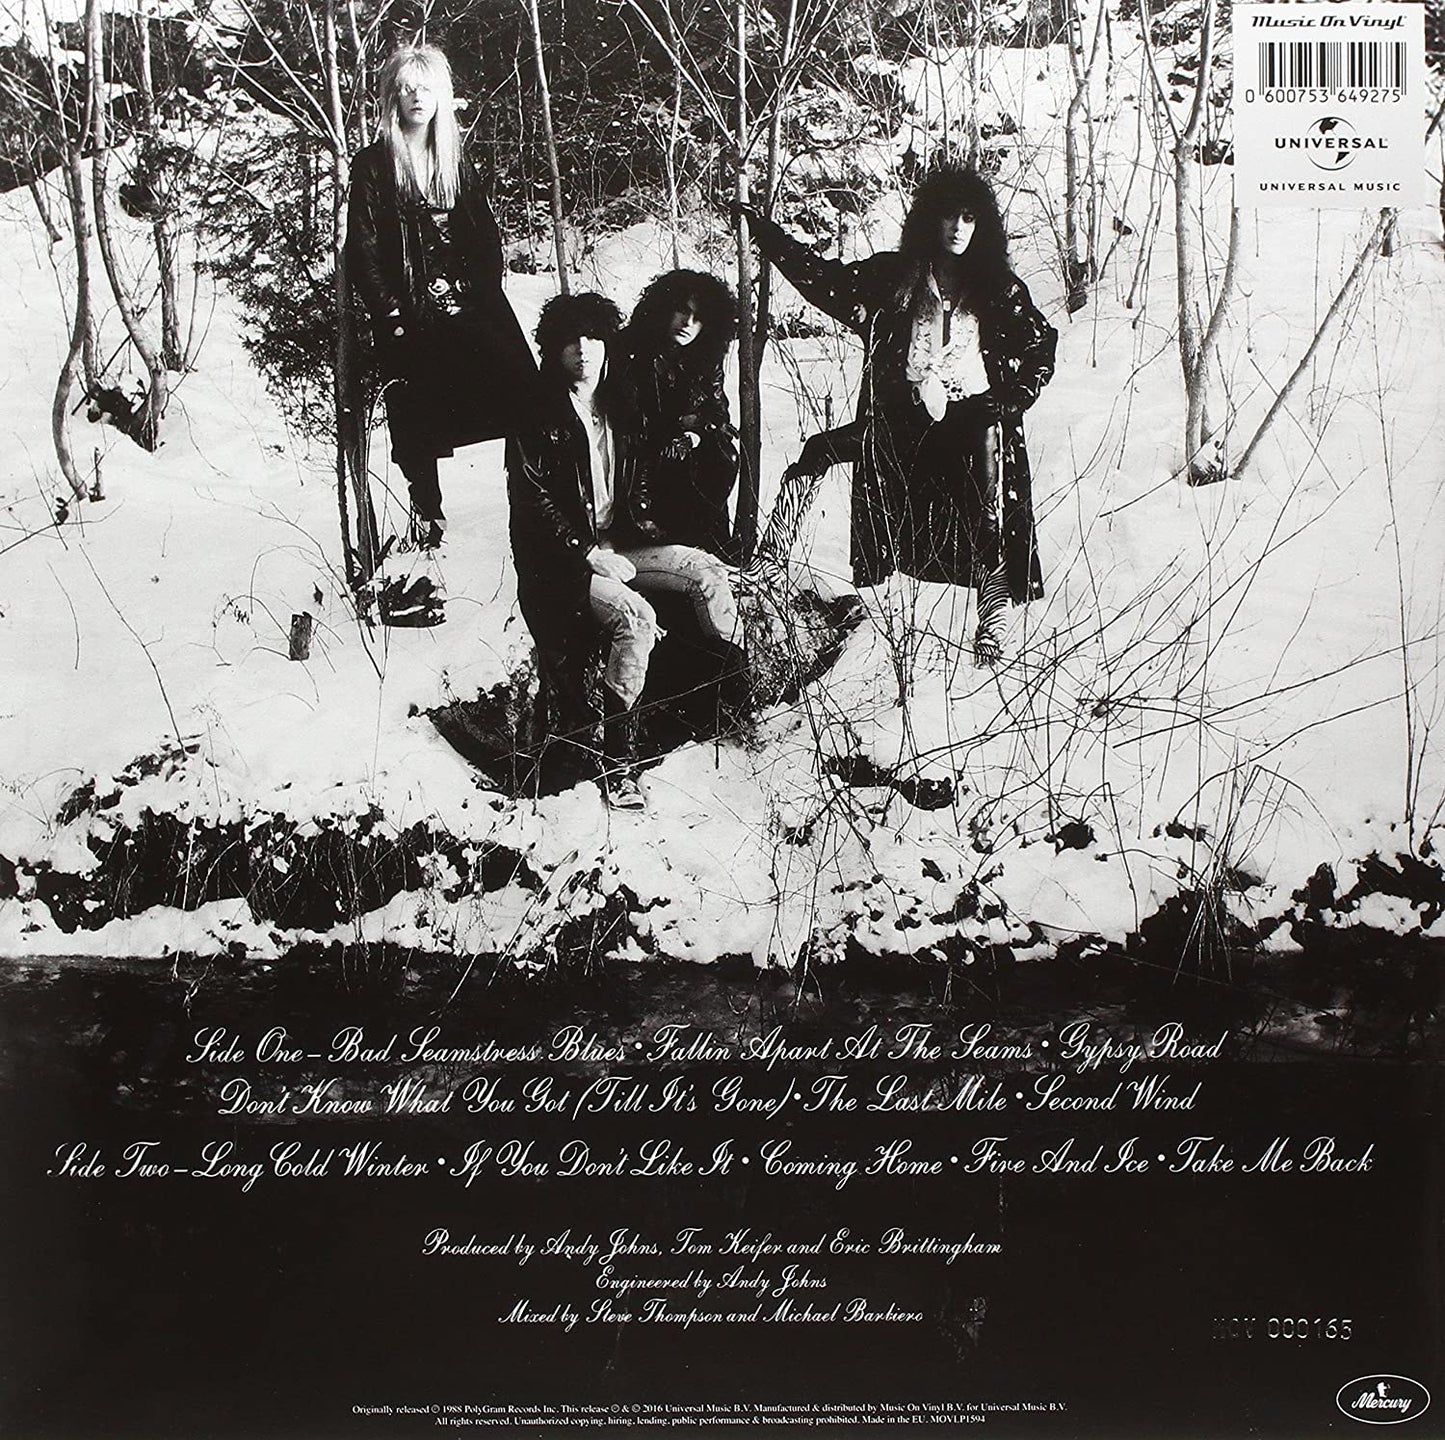 Cinderella/Long Cold Winter (Audiophile Pressing) [LP]